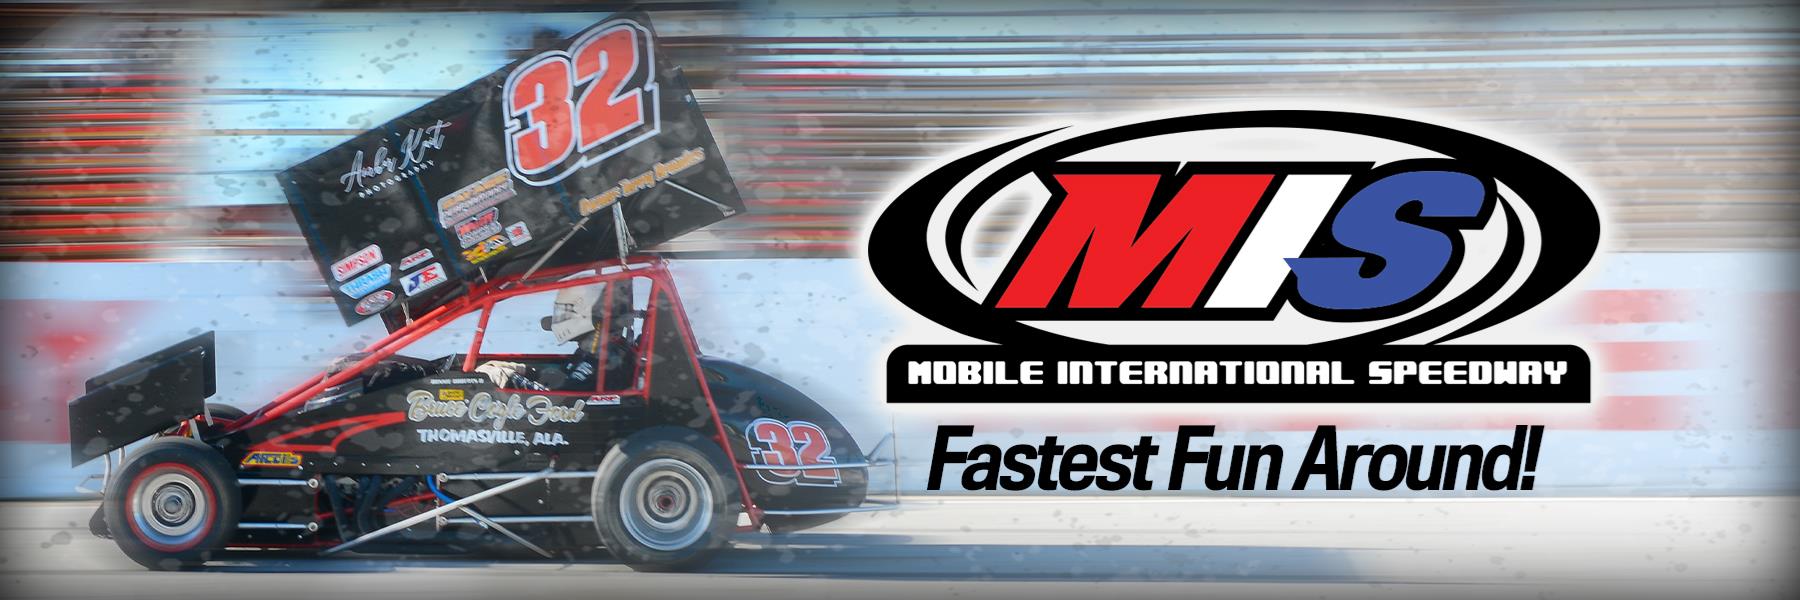 4/20/2019 - Mobile International Speedway